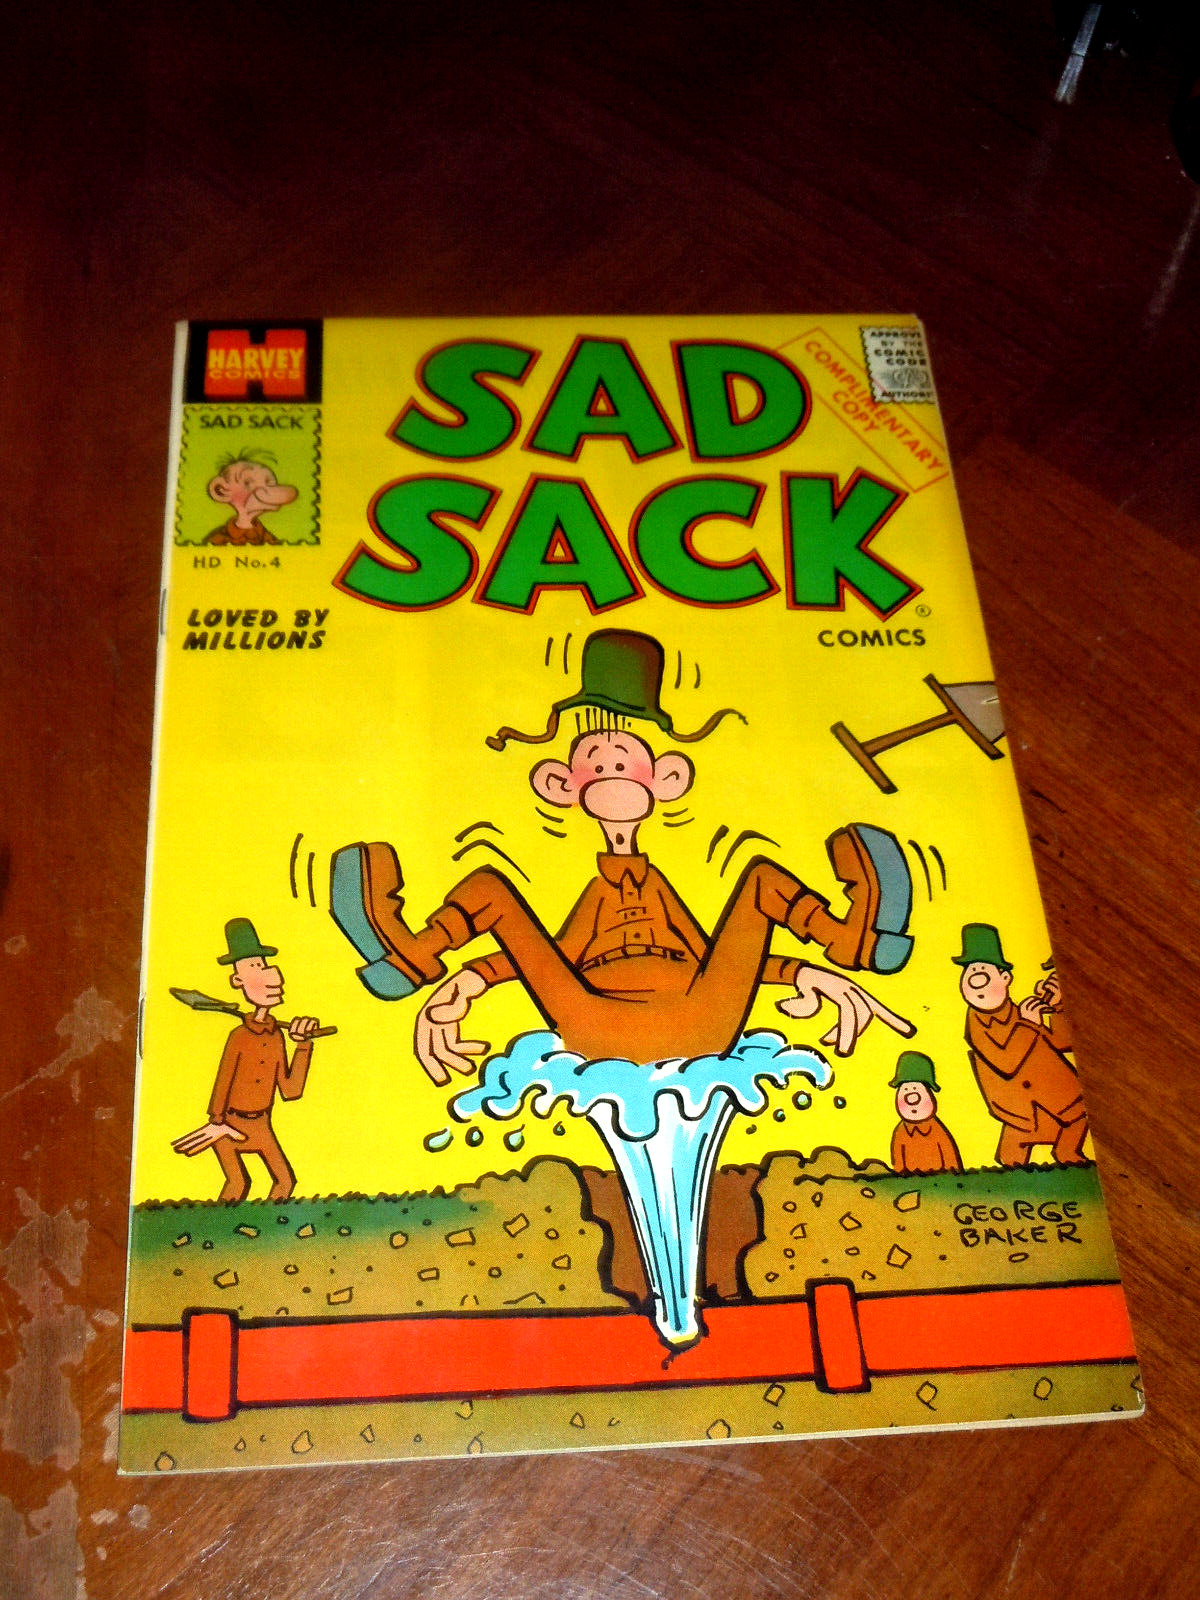 SAD SACK COMICS #4 (1957)  NM (9.4) cond.  U.S. ARMY Complimentary Series